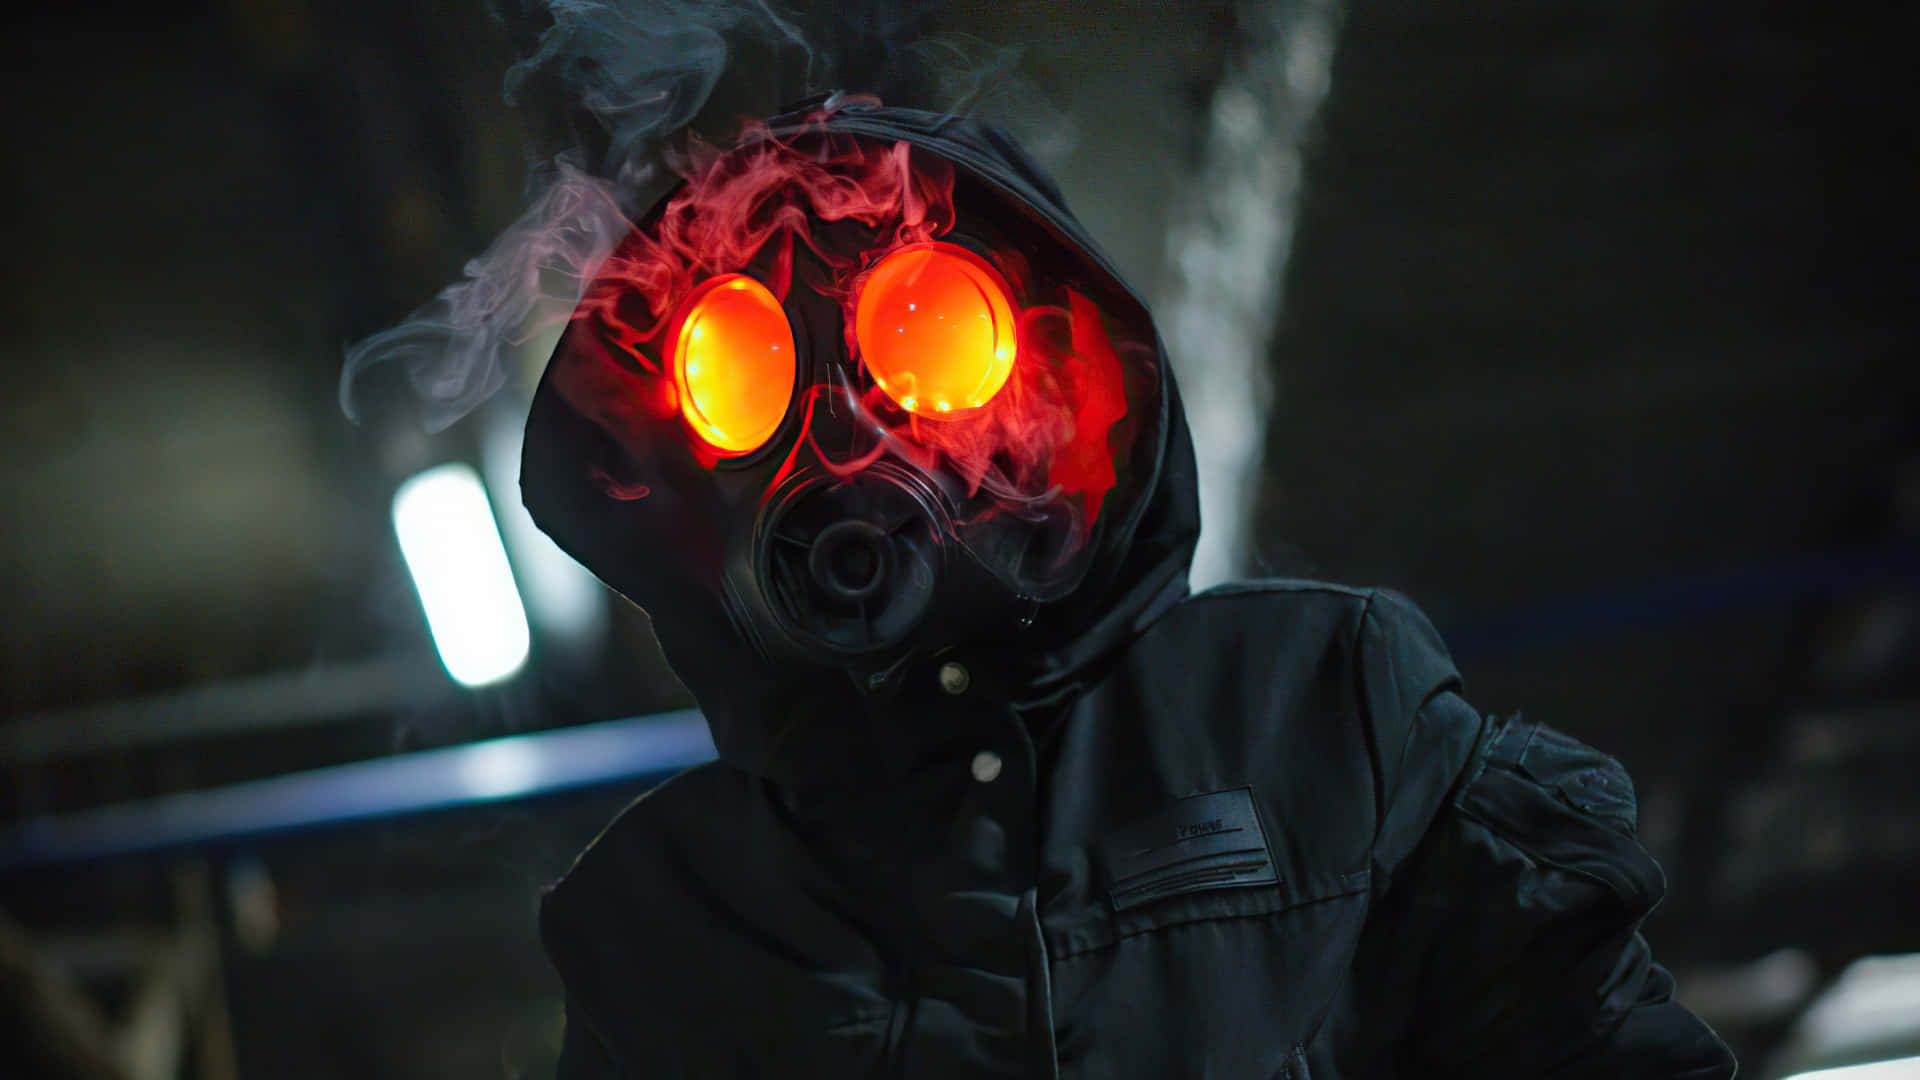 Gas Mask Boy Fire Background